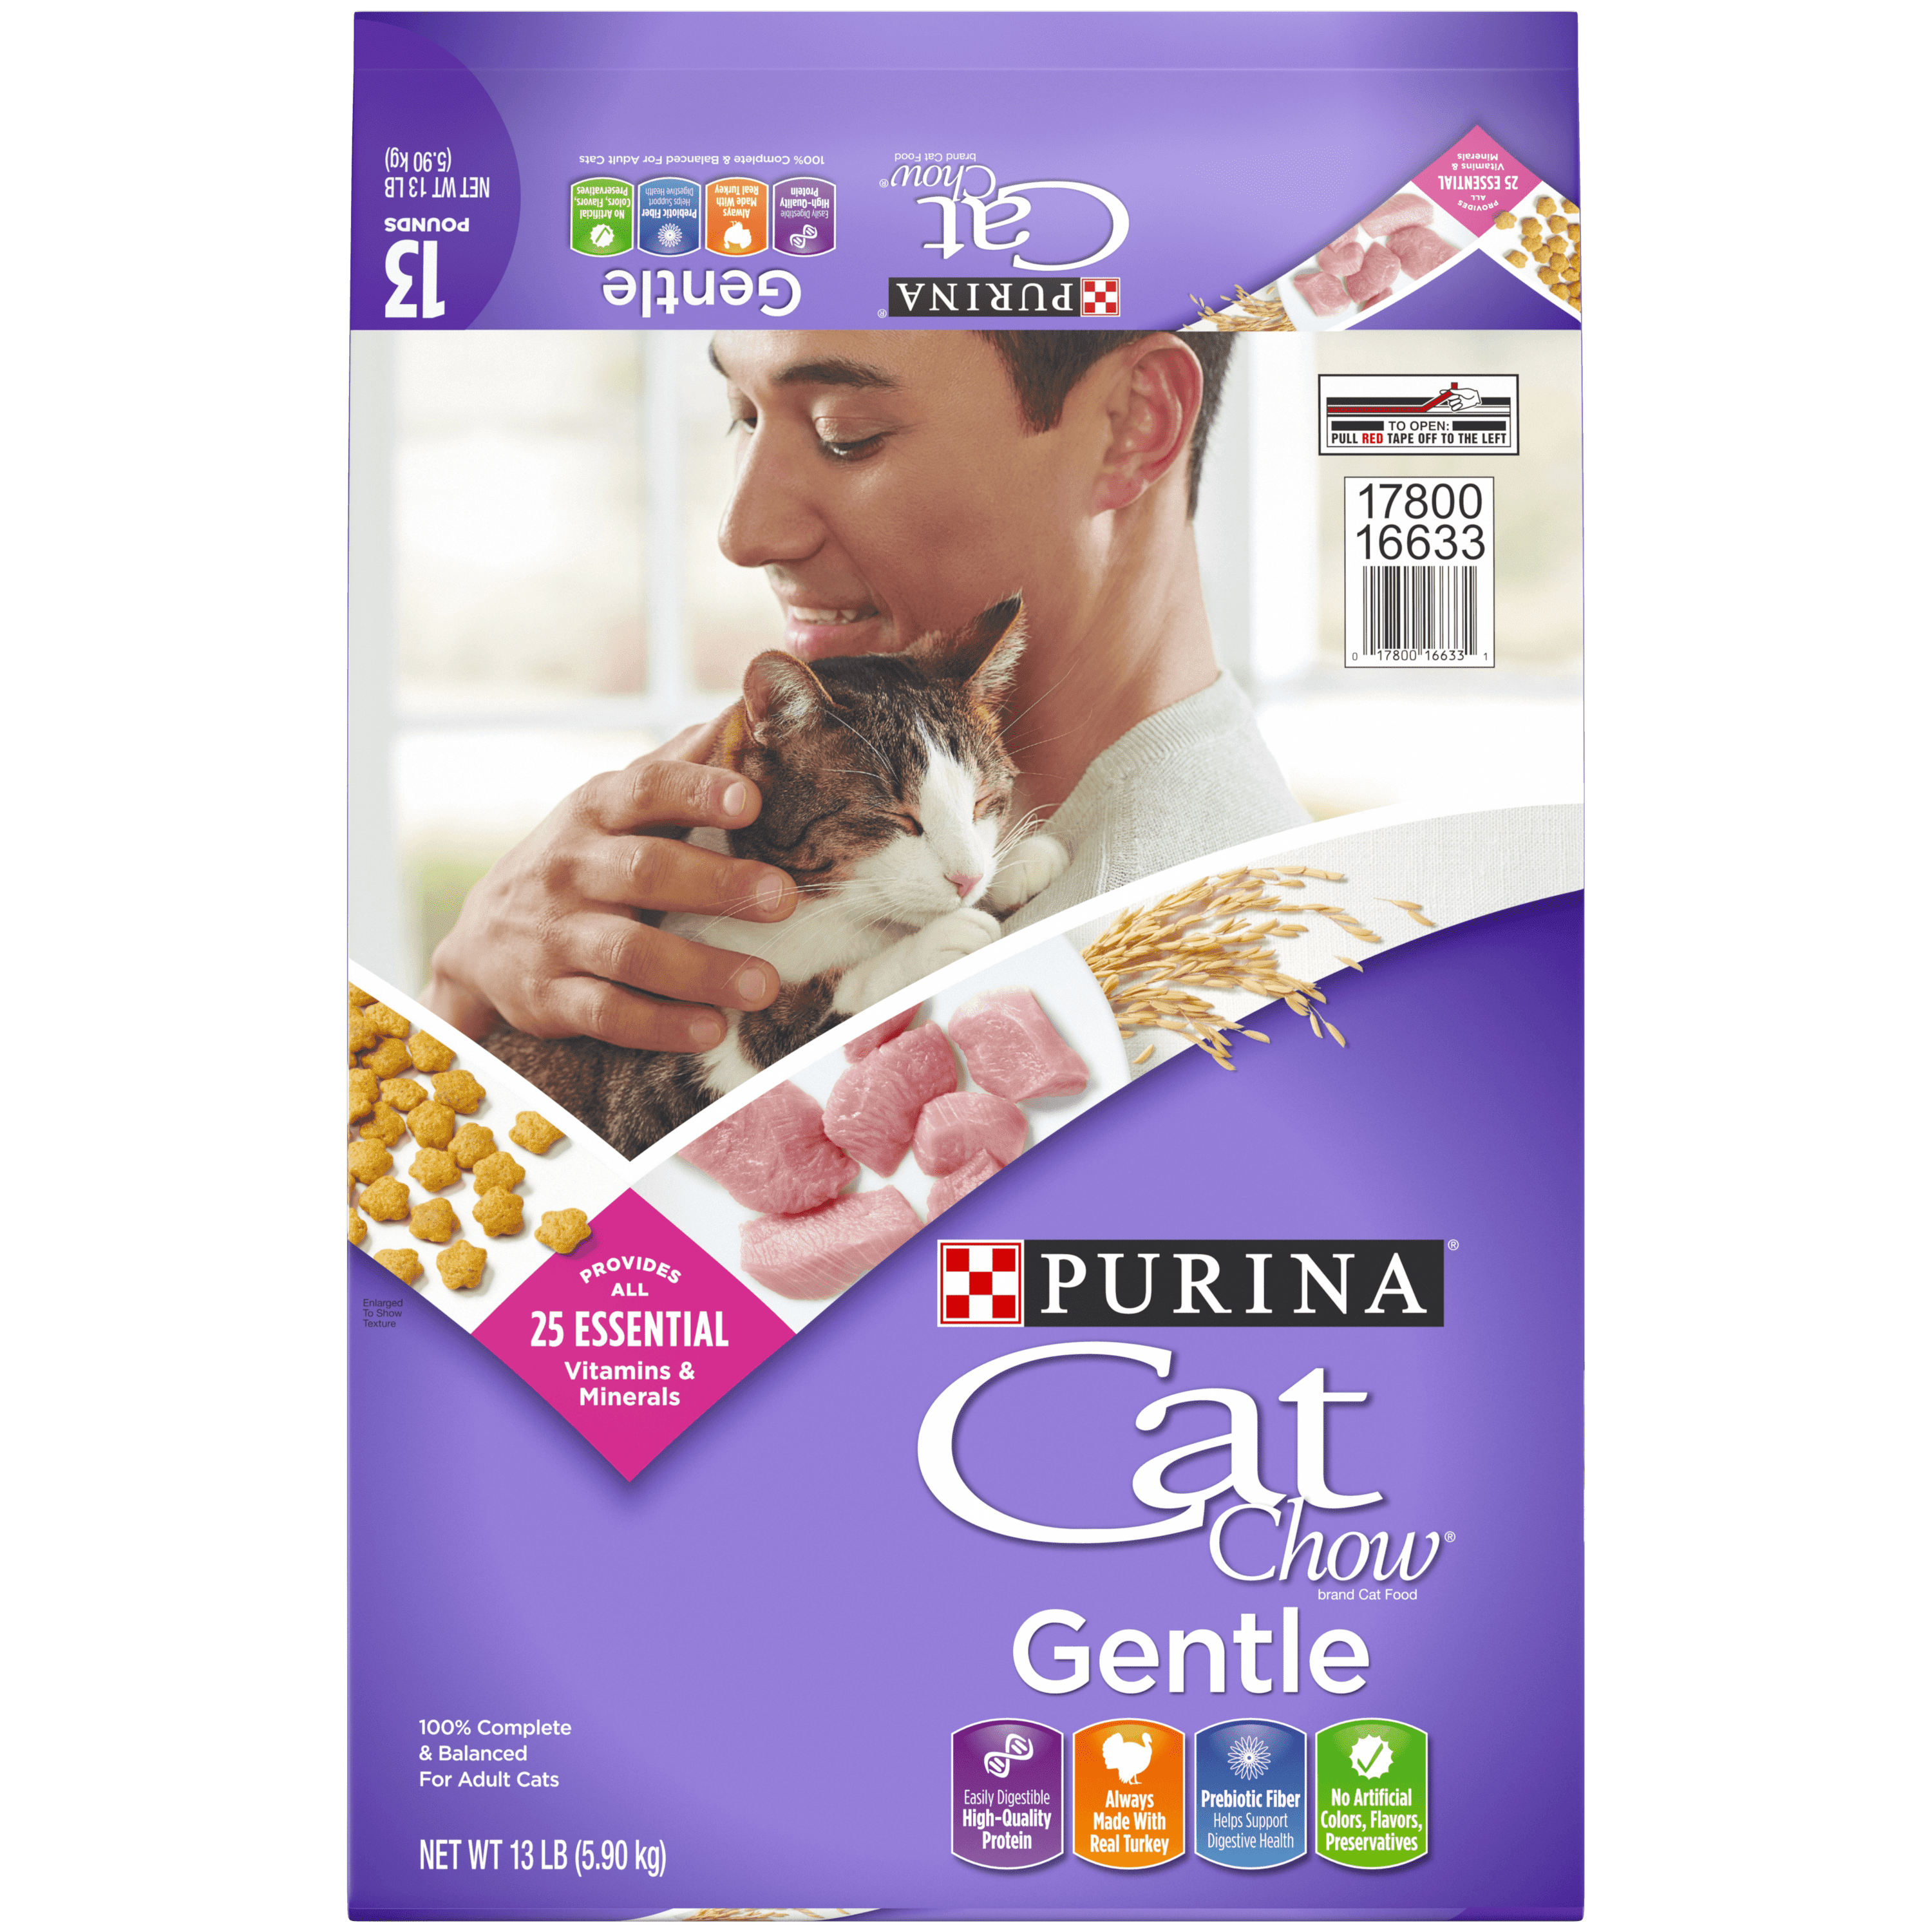 Purina Cat Chow Gentle Recall